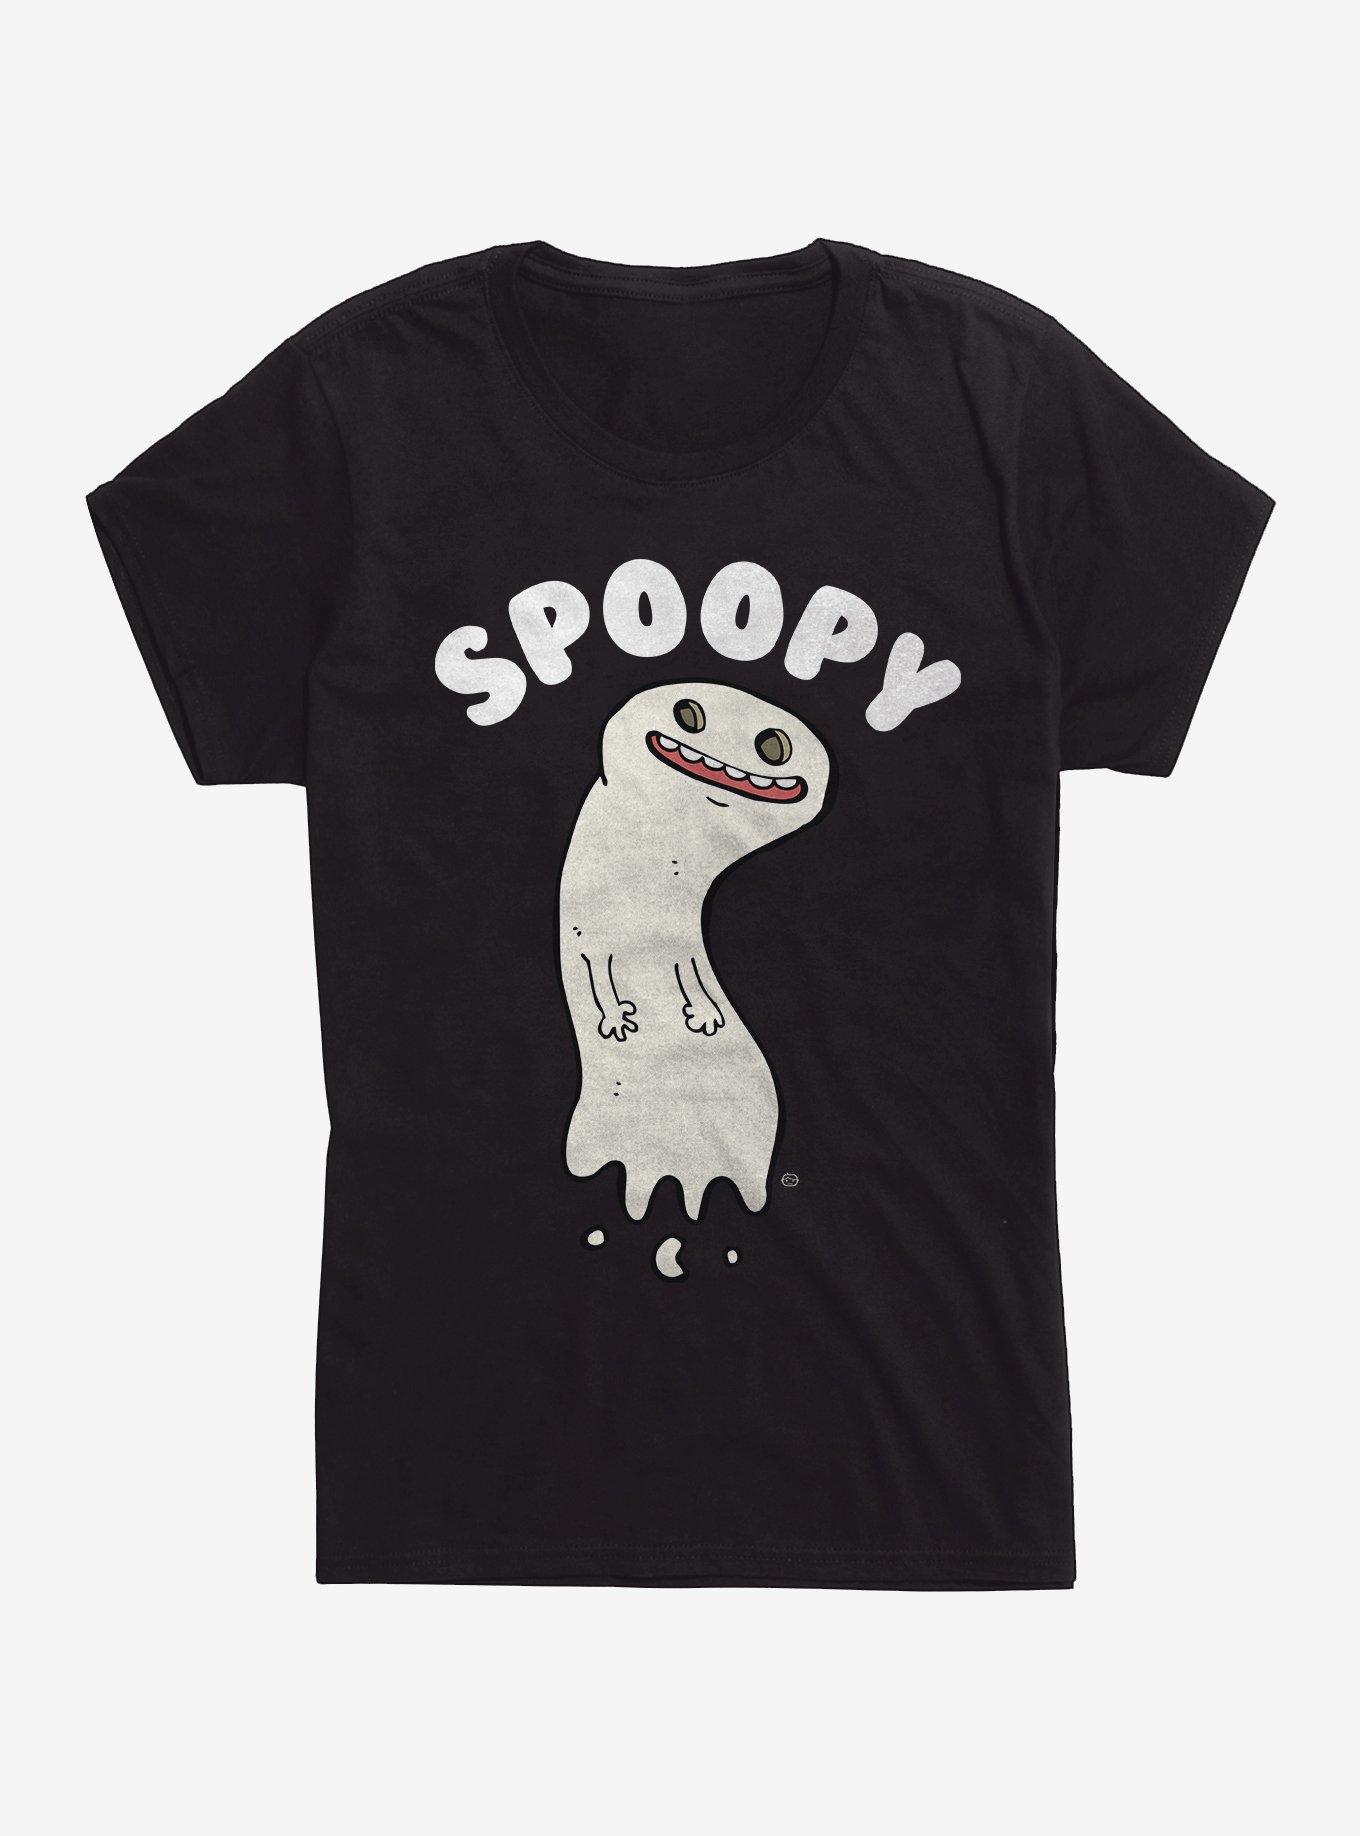 Spoopy Monster Girls T-Shirt, BLACK, hi-res